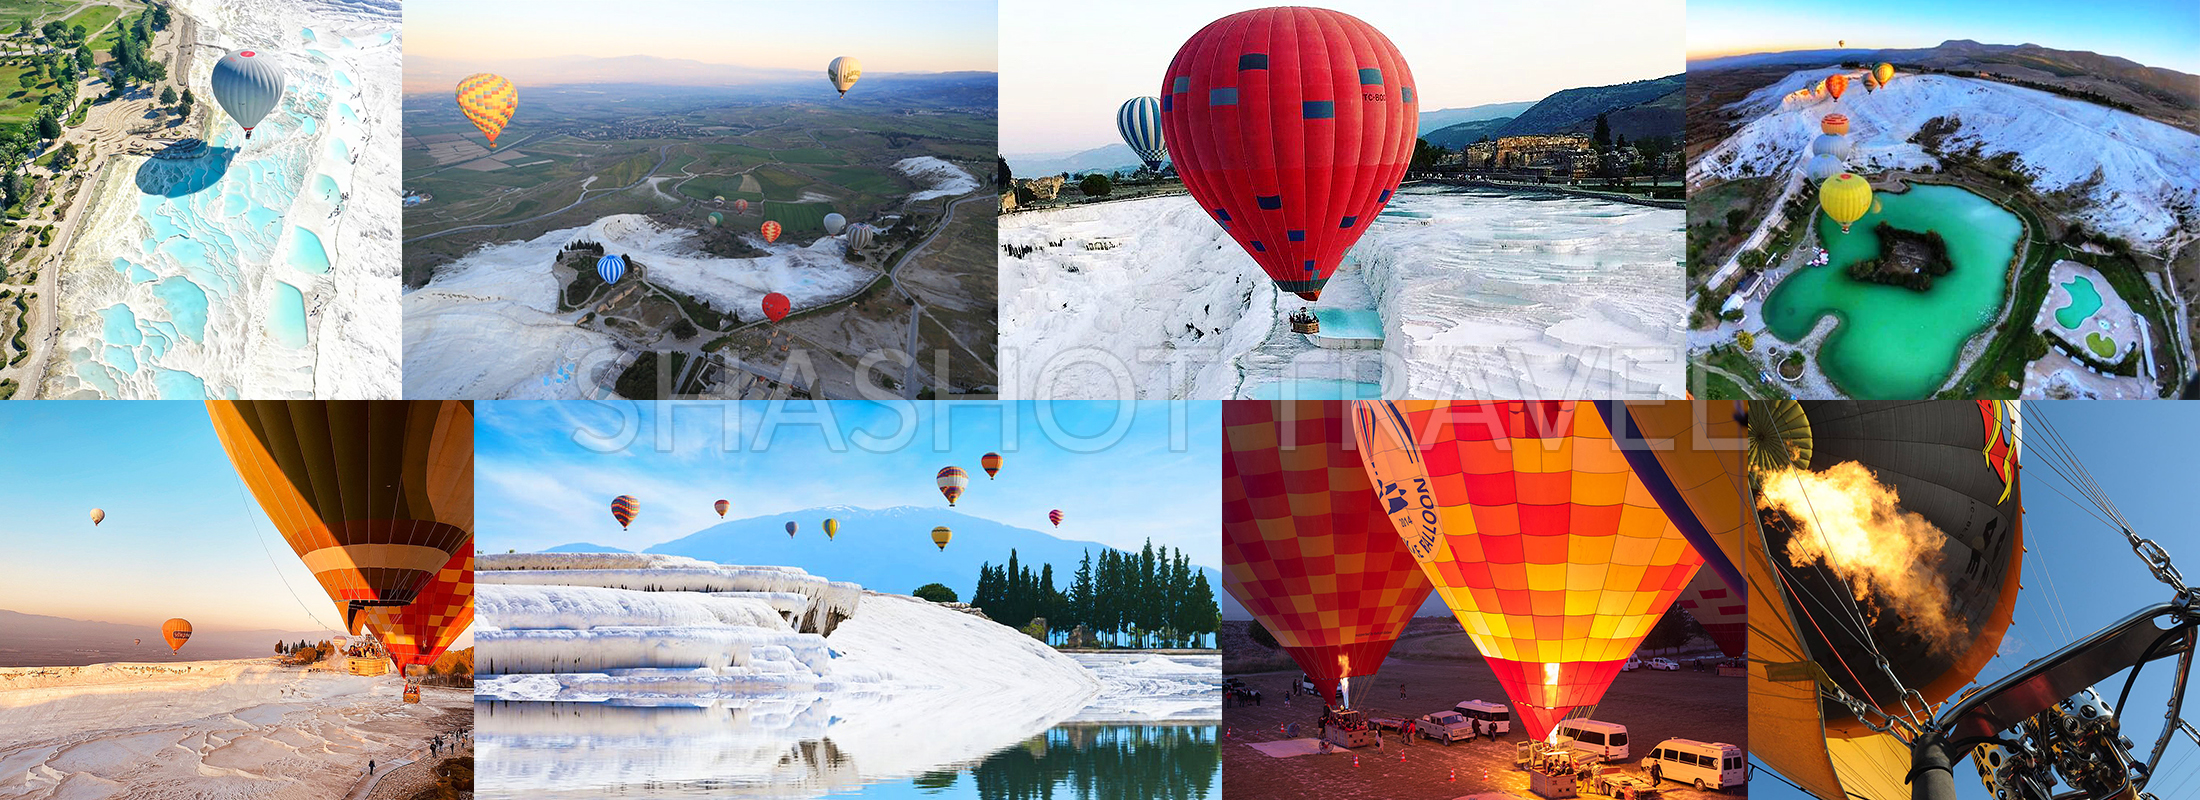 pamukkale-hot-air-balloon-tour-turkey